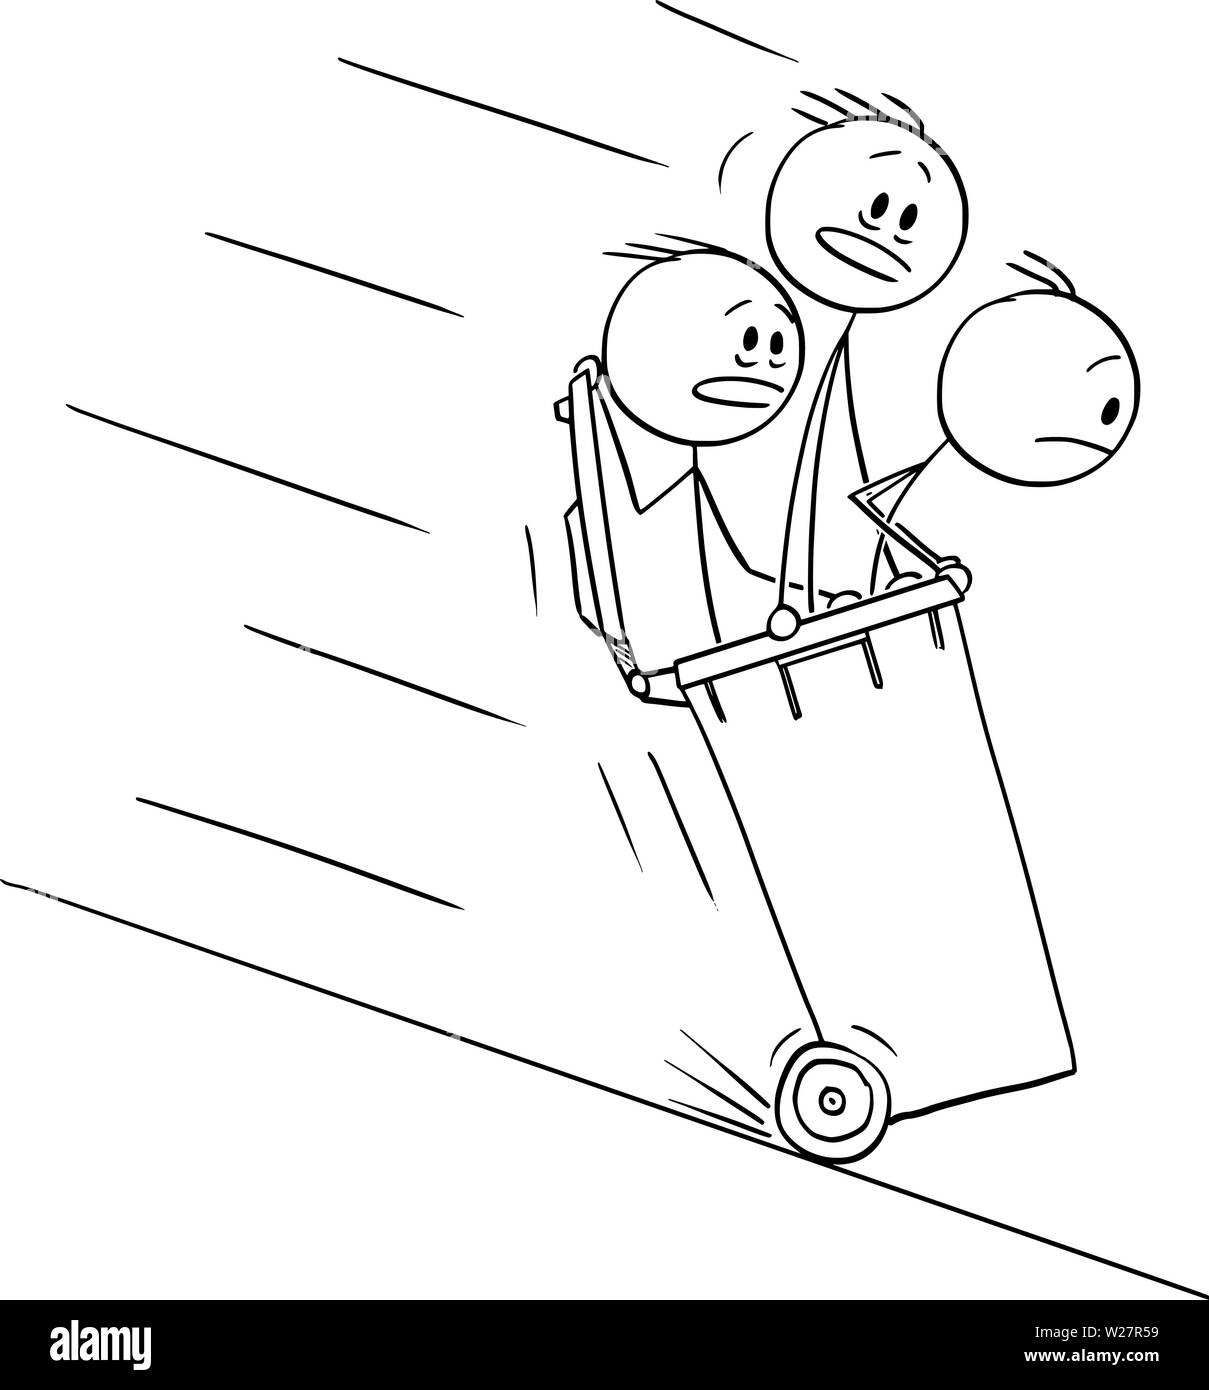 Vector cartoon stick figure drawing conceptual illustration of men or businessmen riding inside of wheelie bin down the hill. Stock Vector